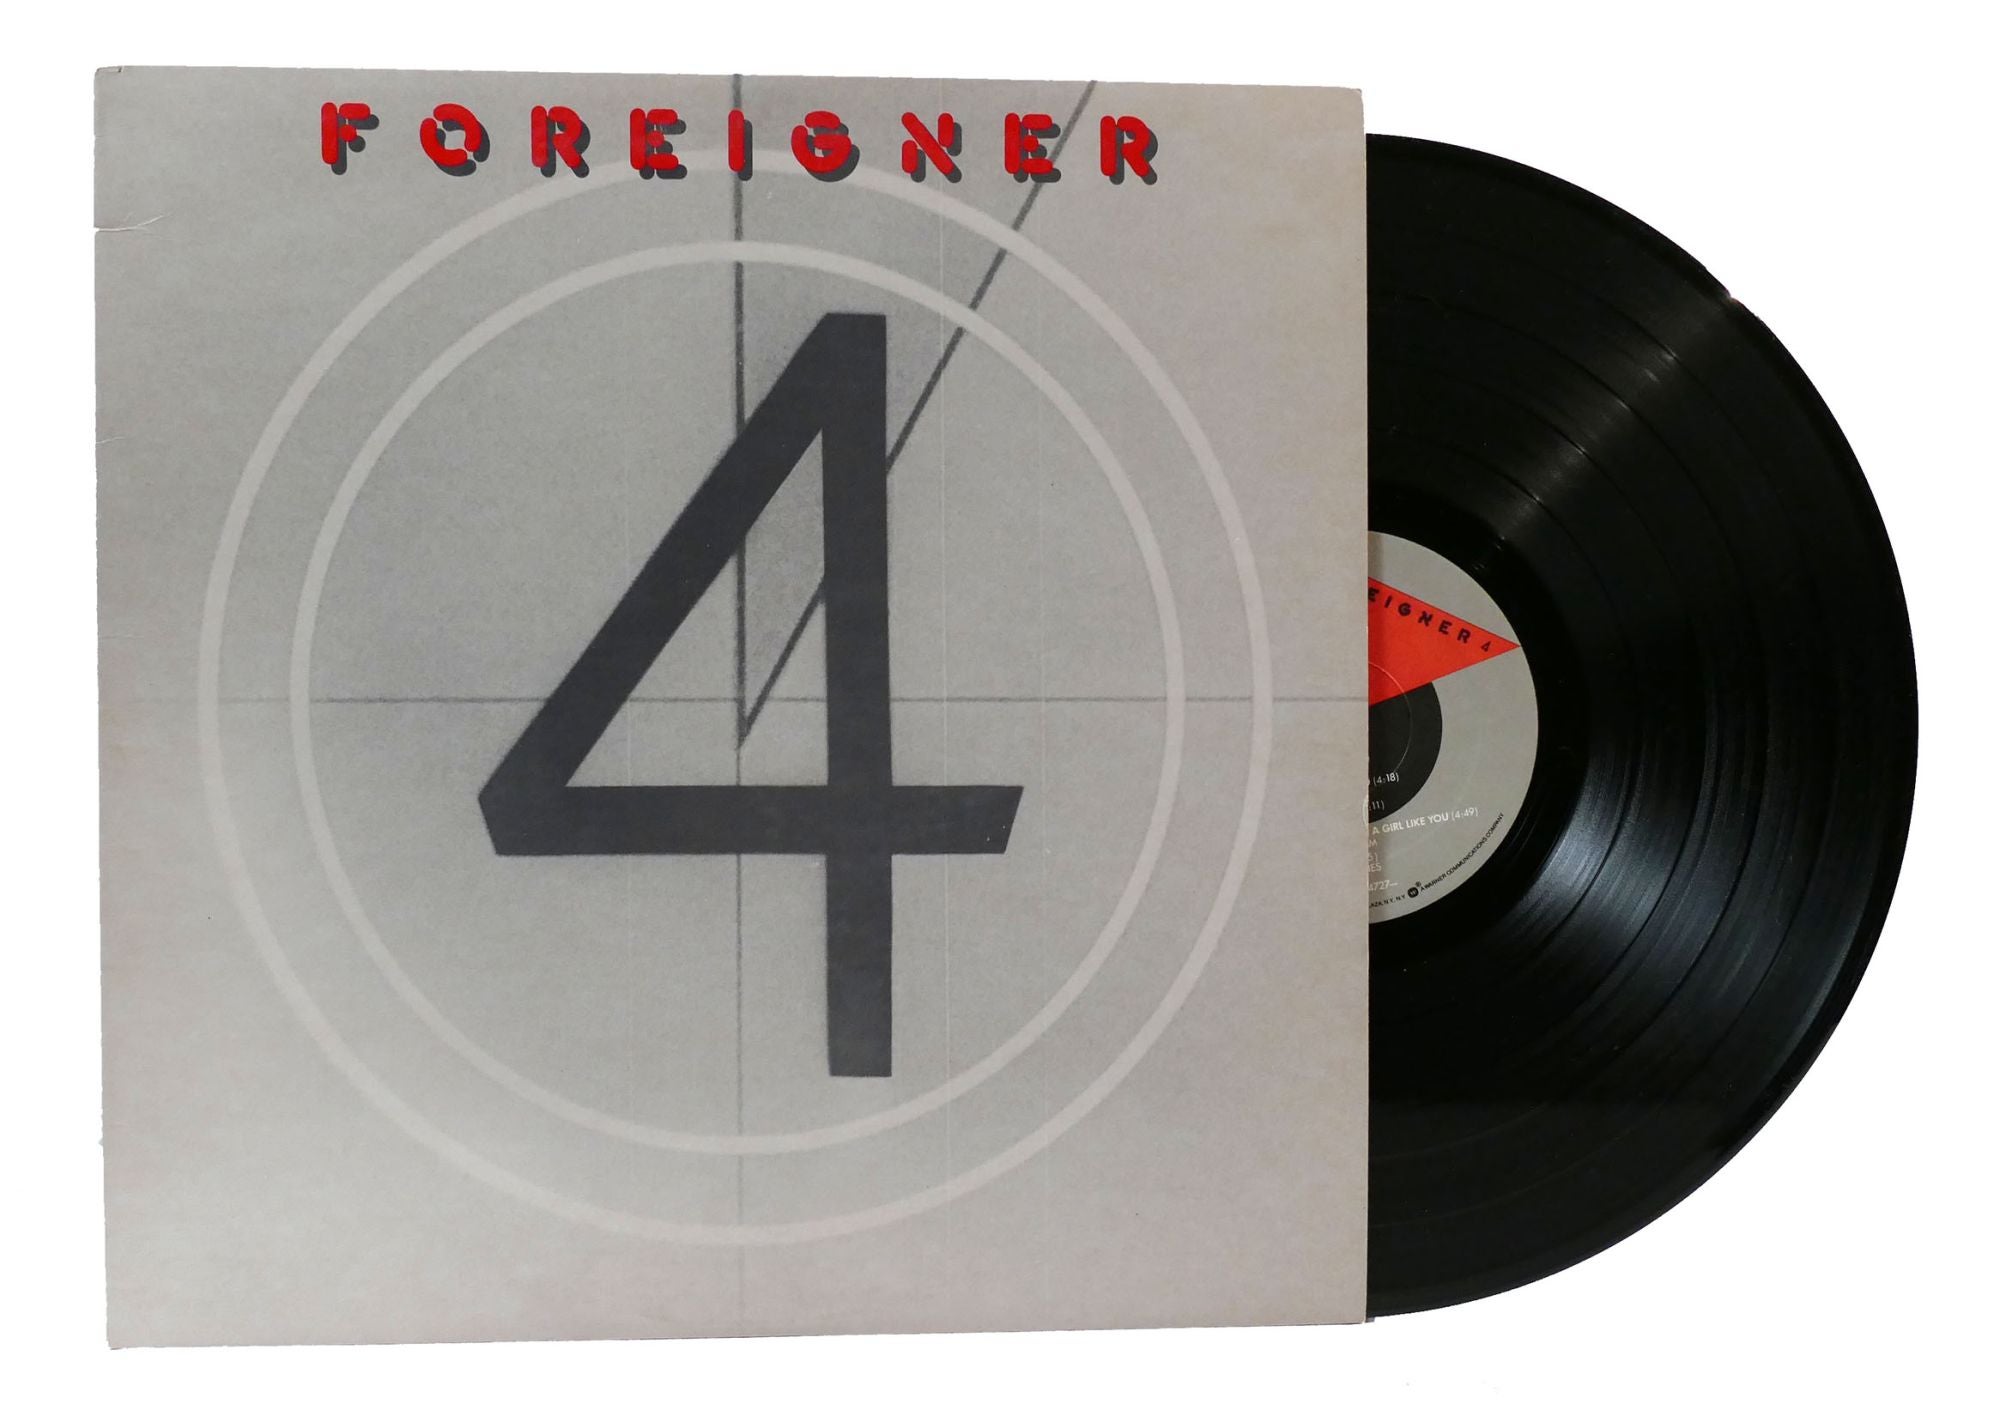 FOREIGNER 4 VINYL LP by Foreigner on Rare Book Cellar